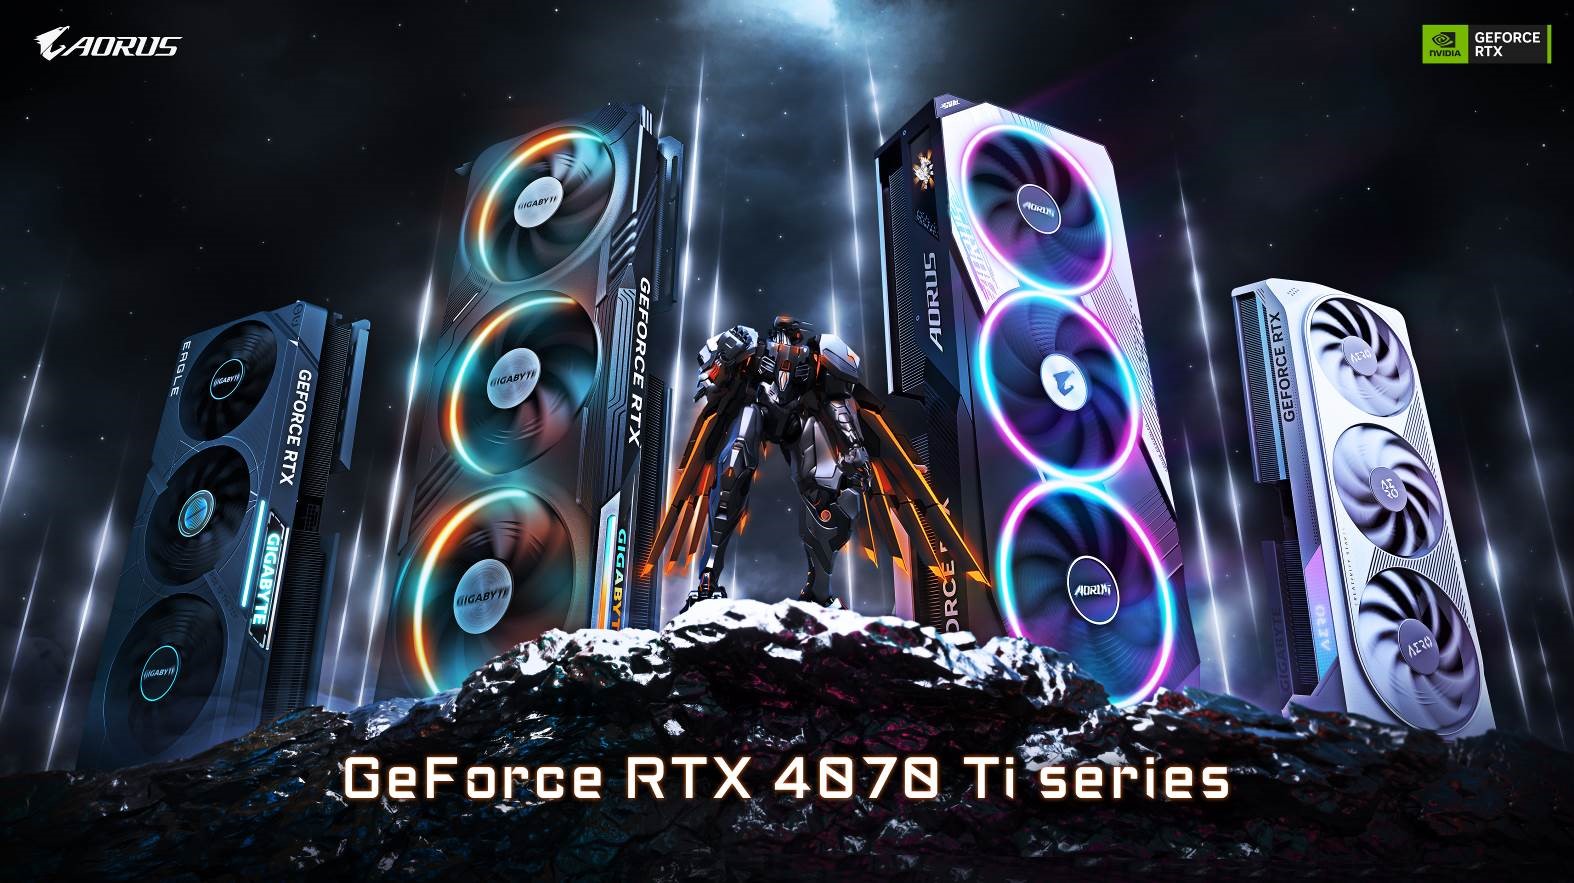 【未使用】 GeForce RTX 4070 GIGABYTE